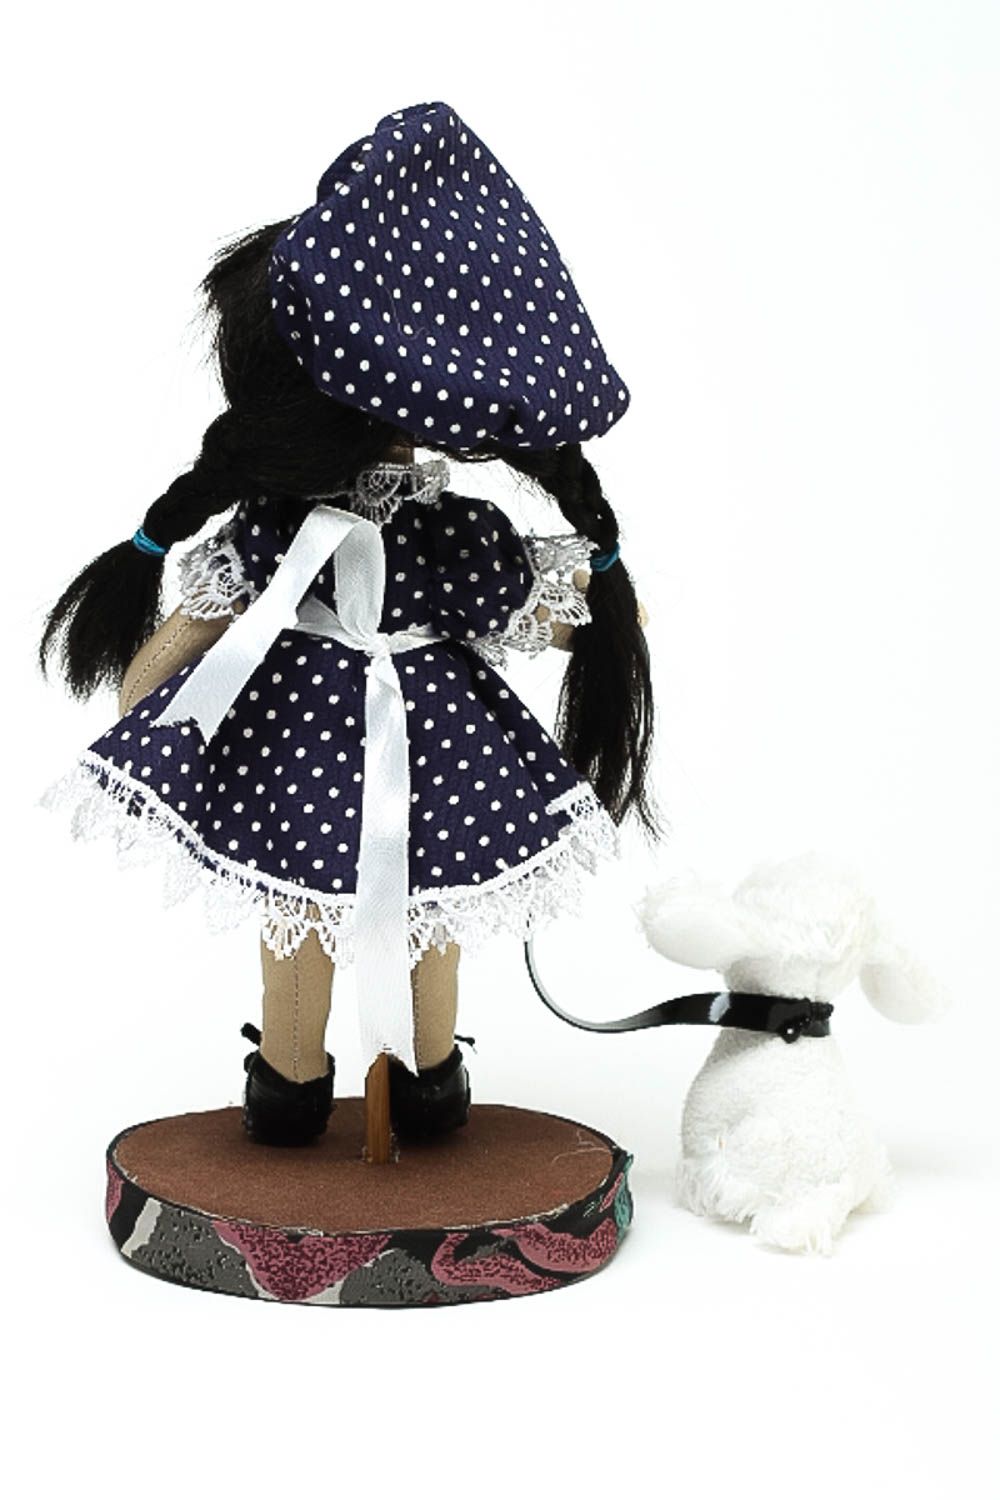 Handmade doll designer doll interior doll soft doll for children decor ideas photo 4